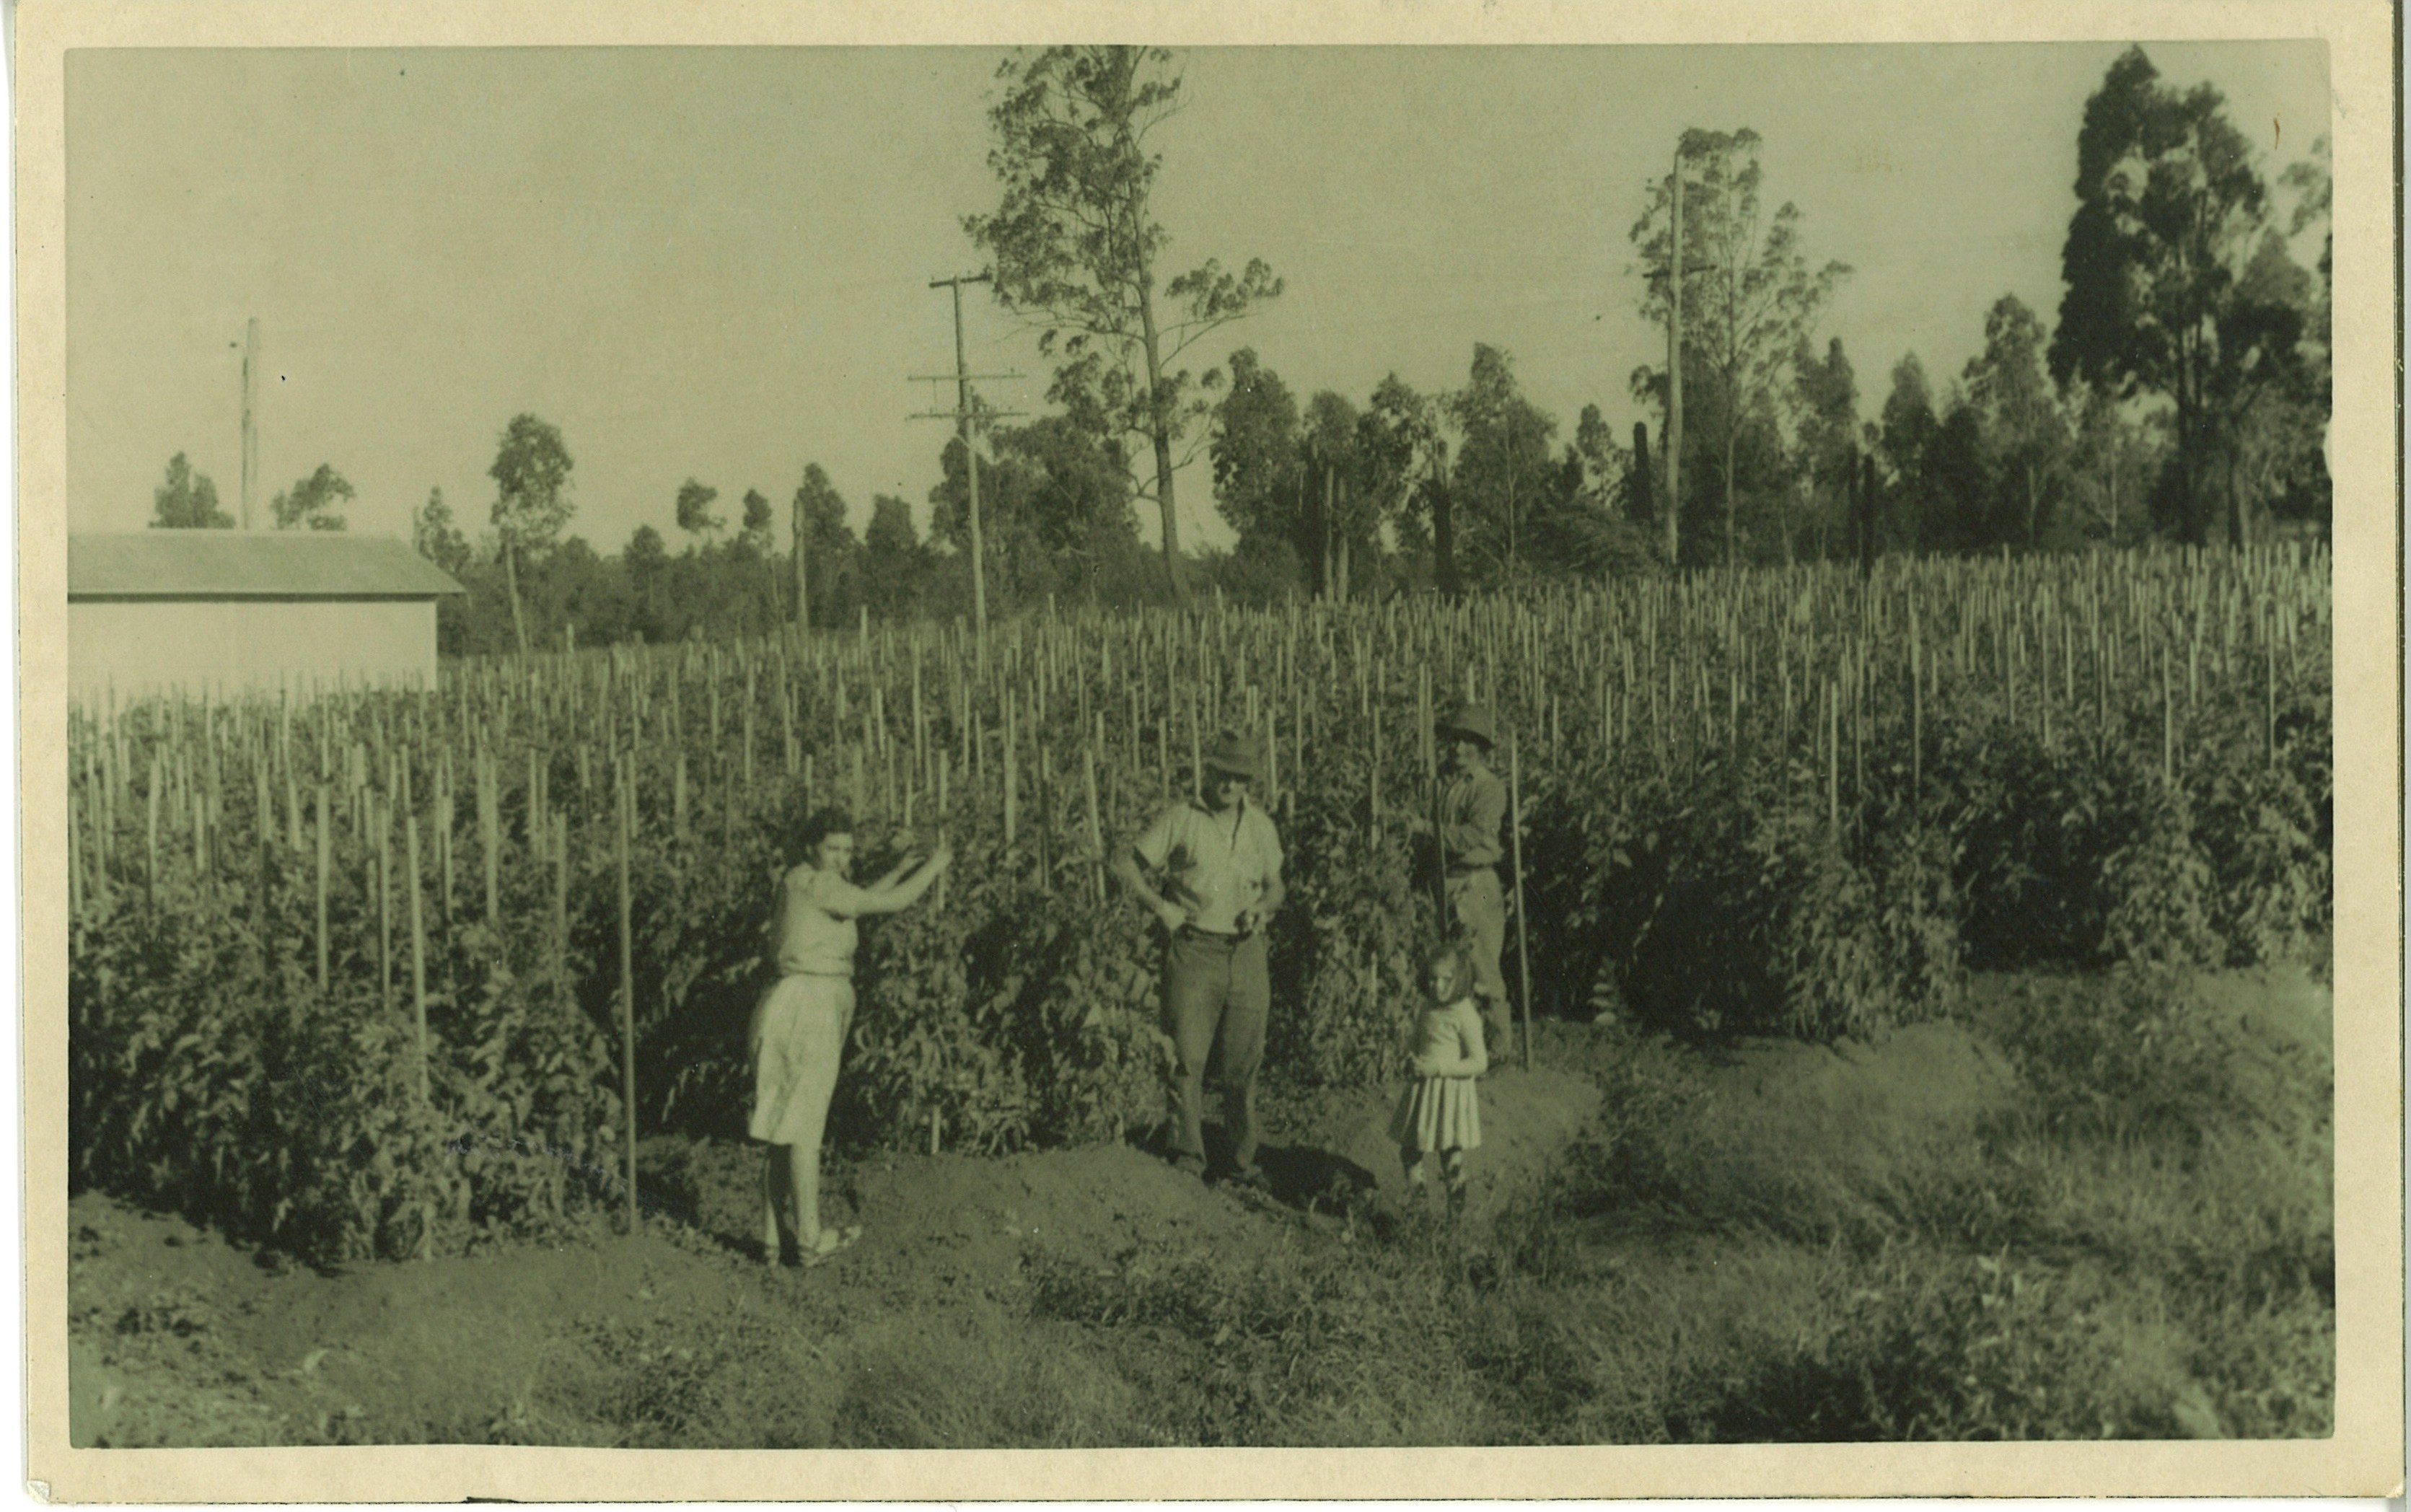 Tomato Farm, Austral, circa 1940